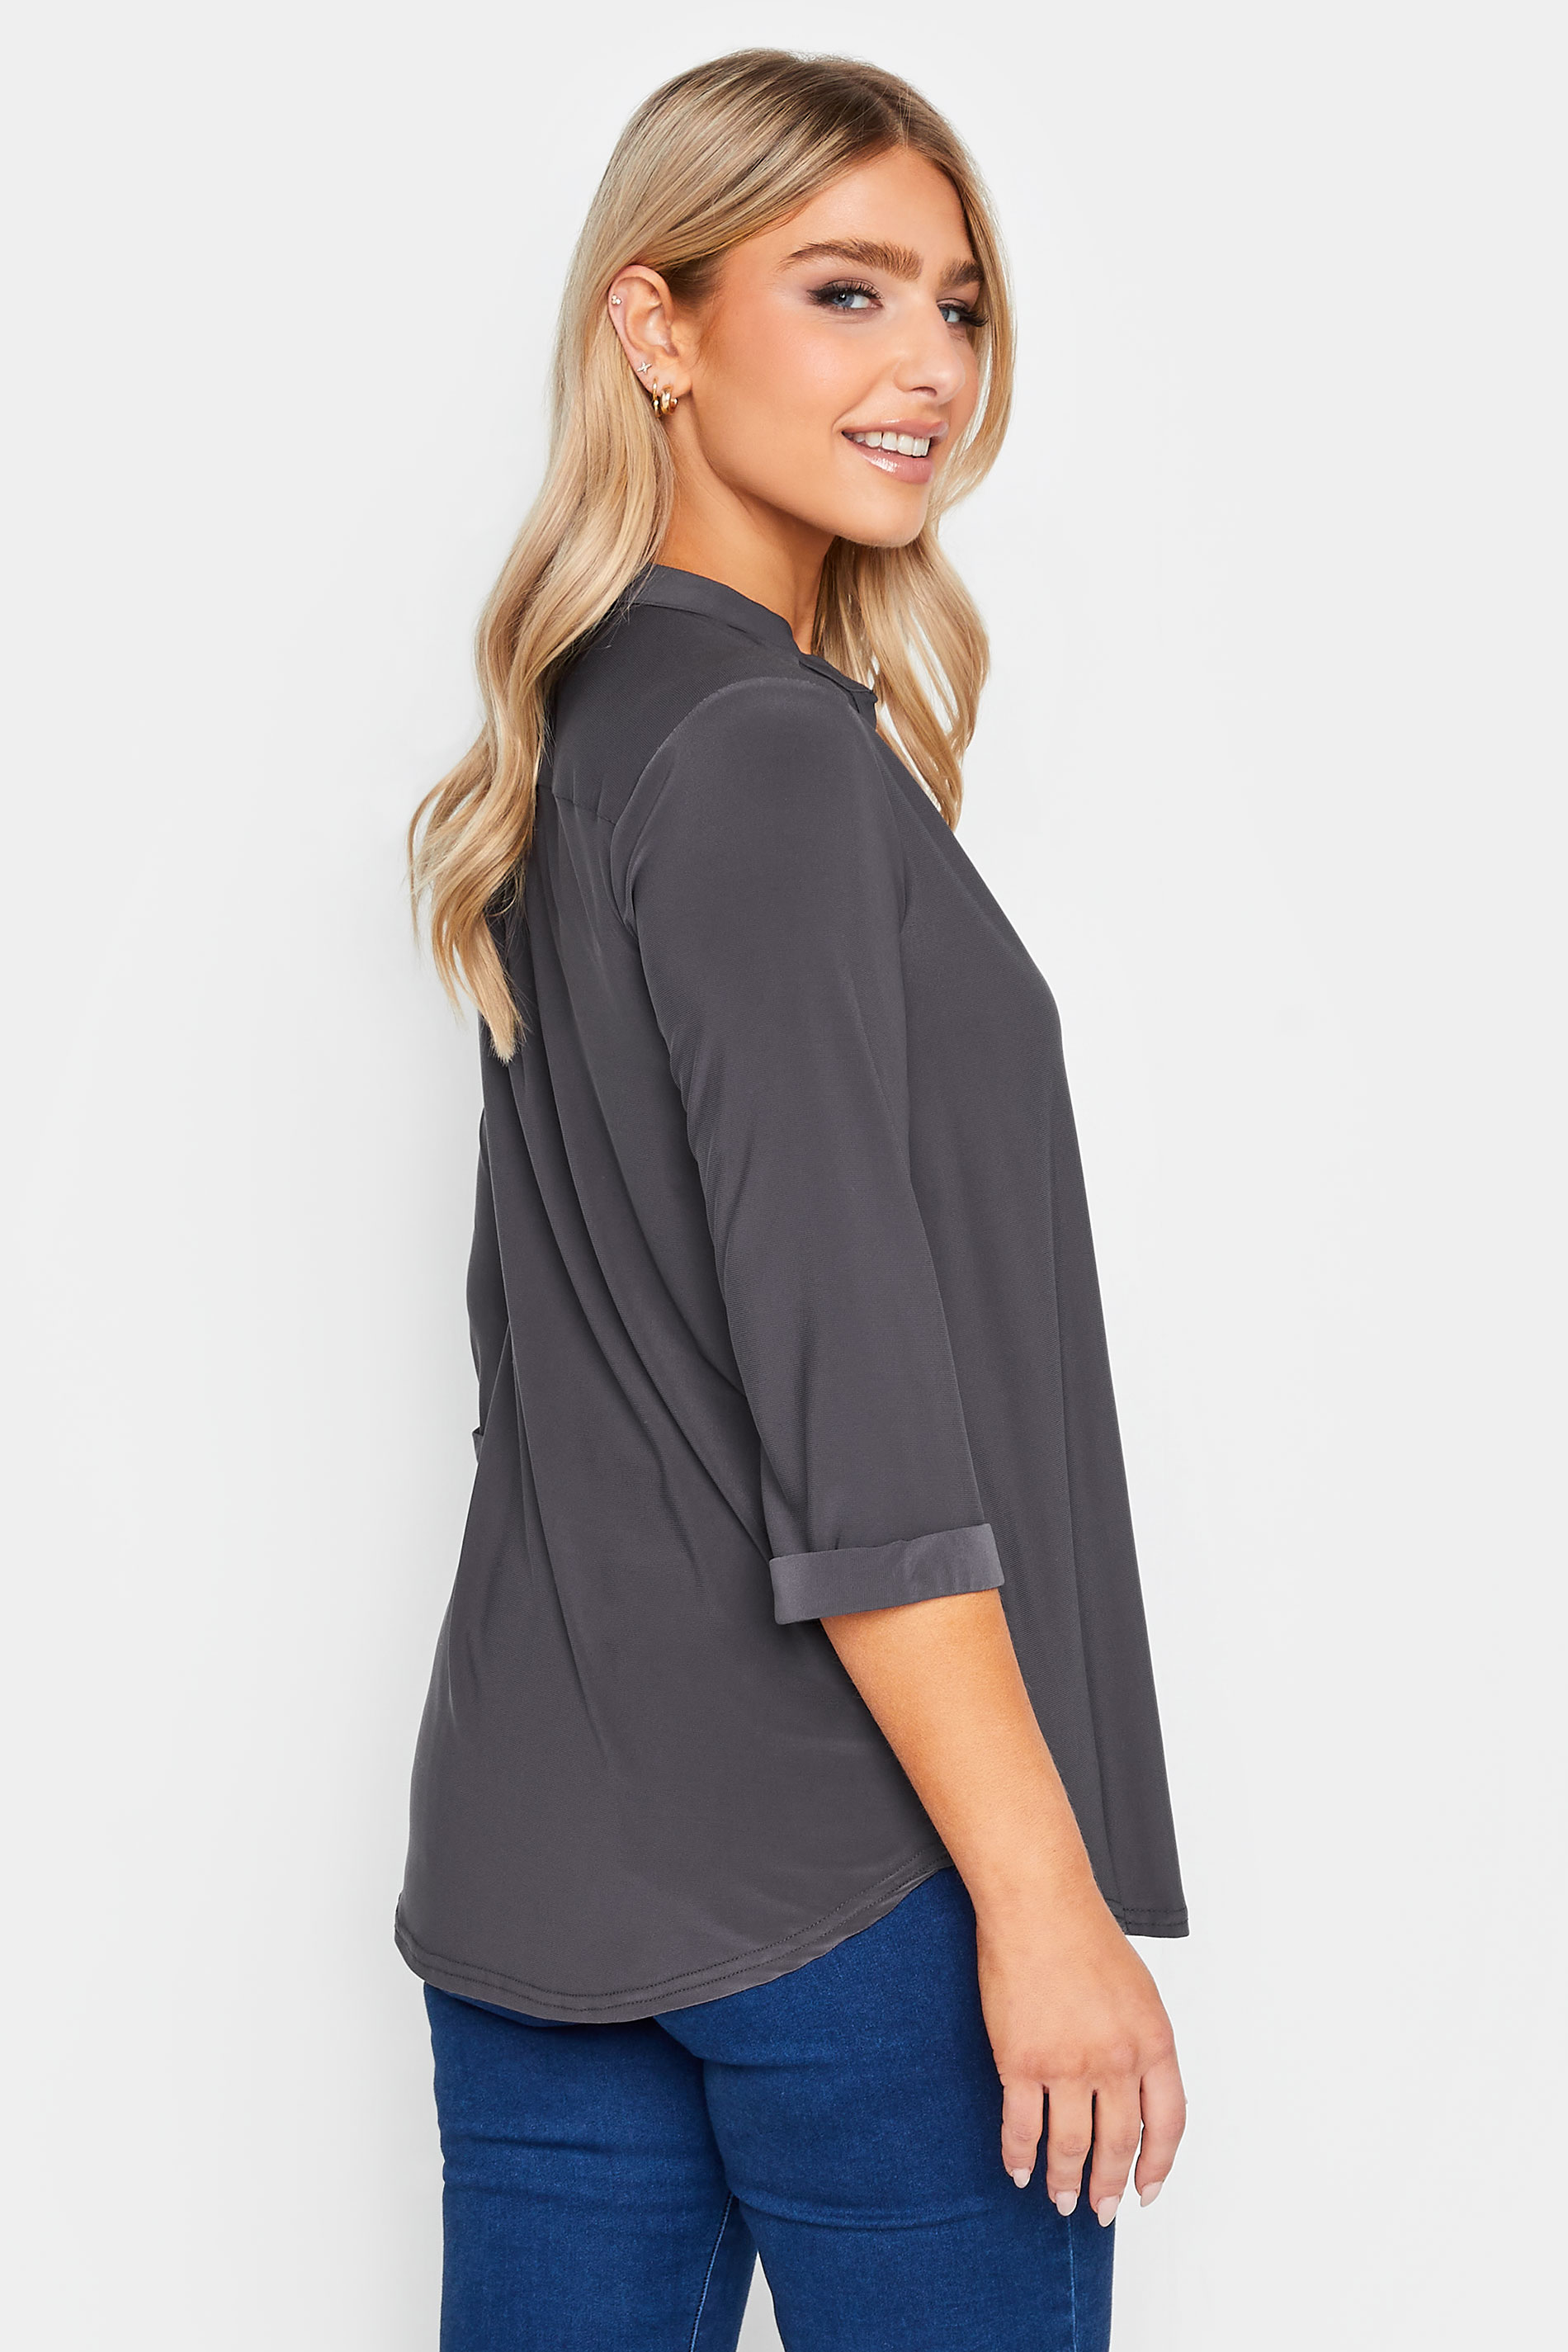 M&Co Grey Half Placket Jersey Shirt | M&Co 3